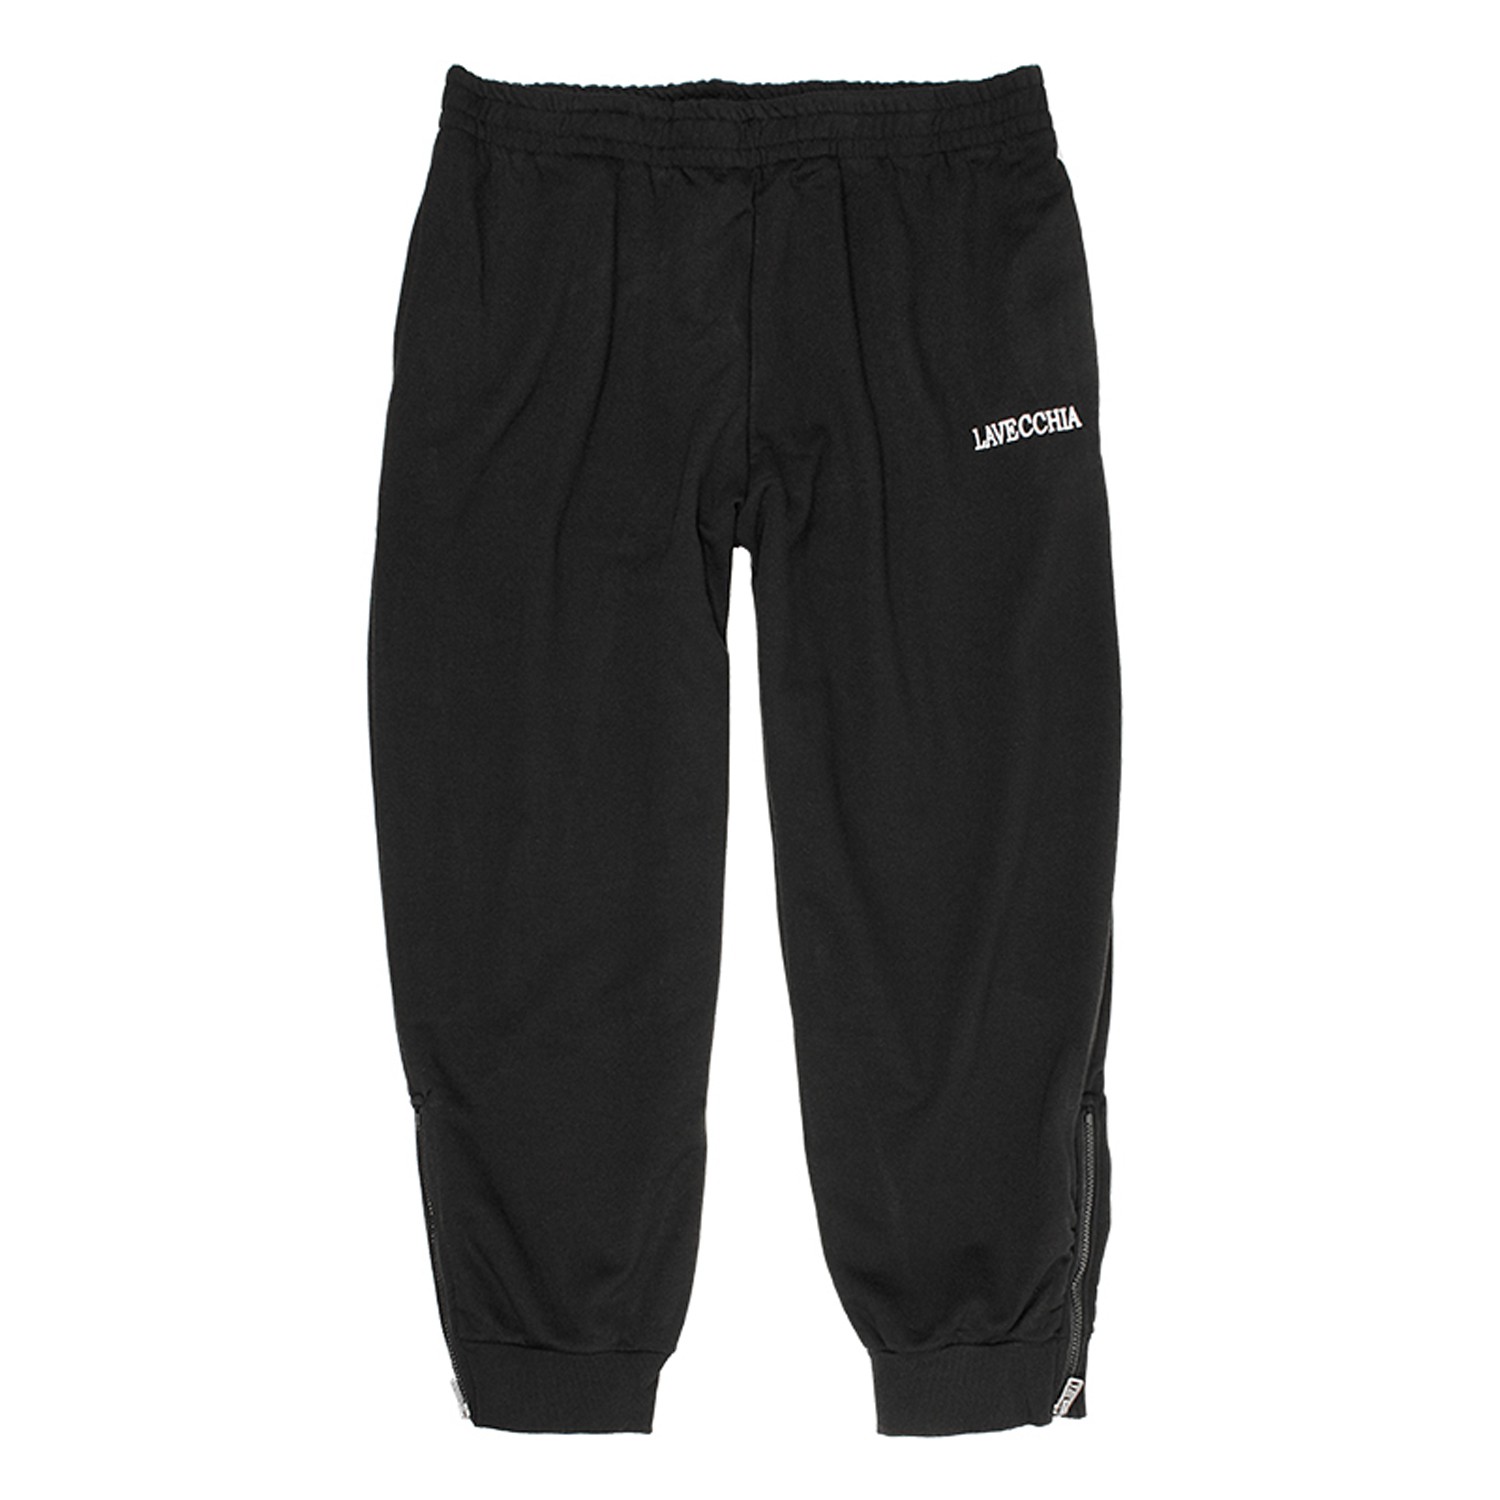 Sweatpants black in plus size by Lavecchia